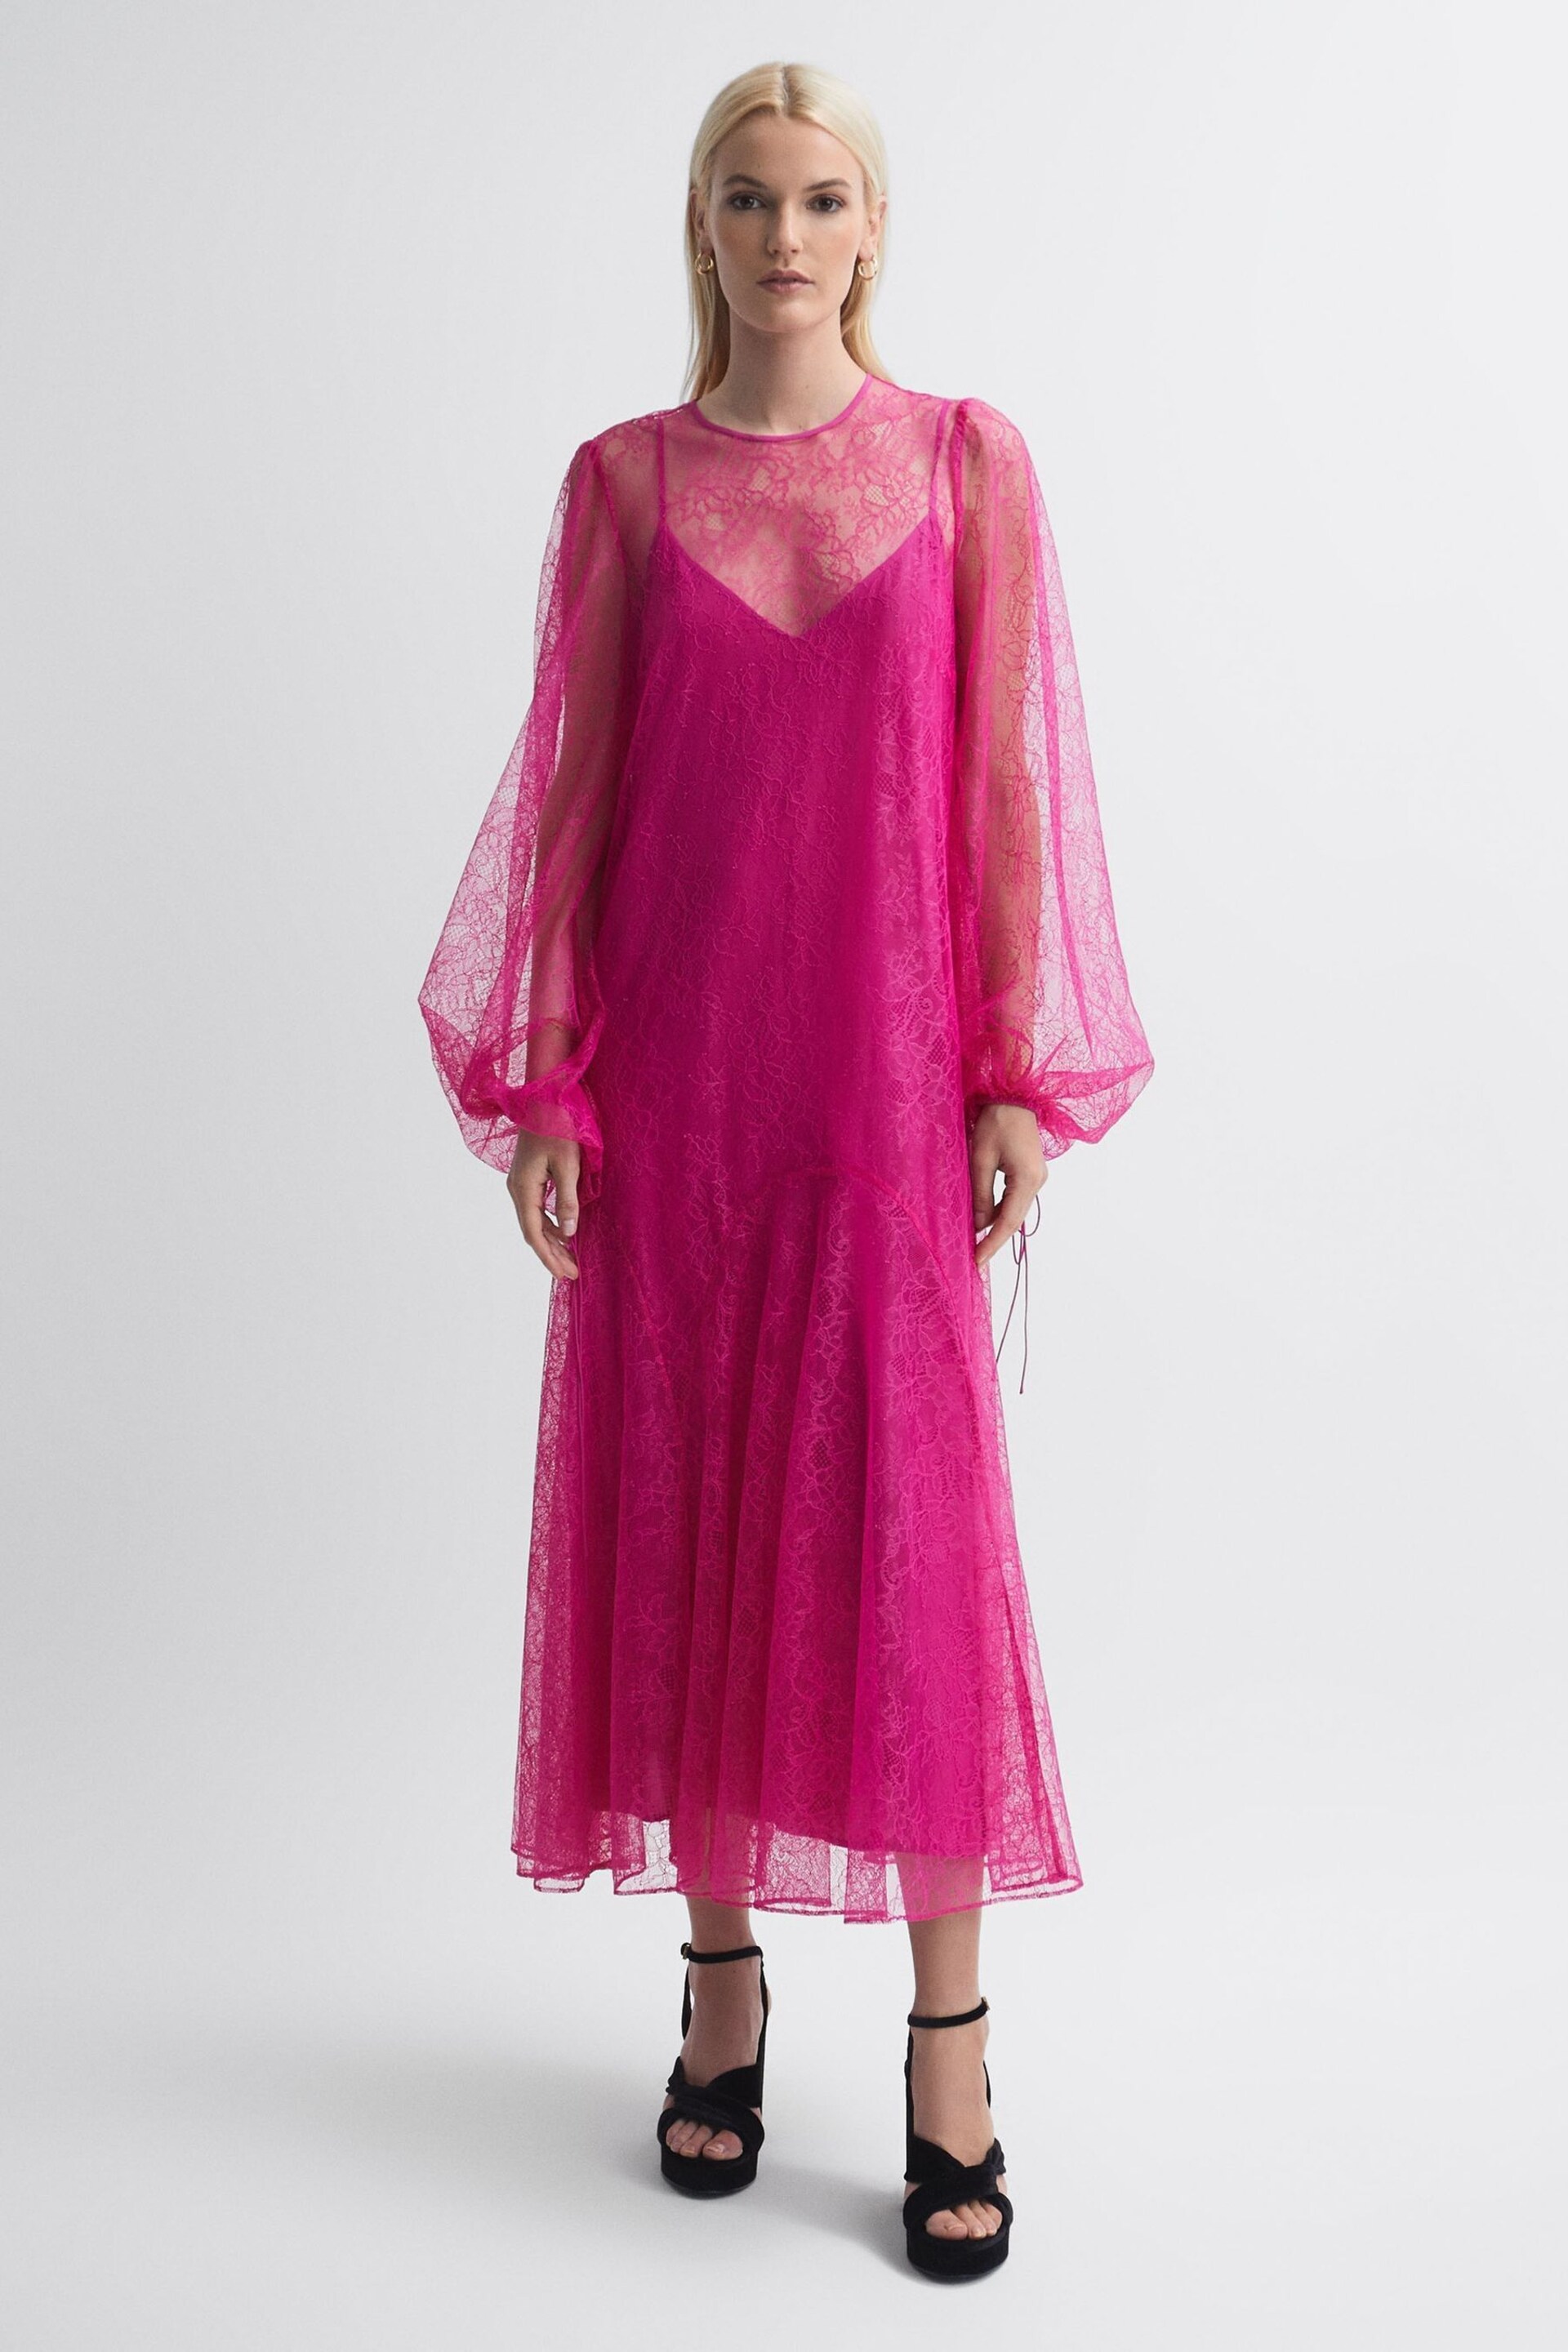 Florere Lace Midi Dress - Image 3 of 6